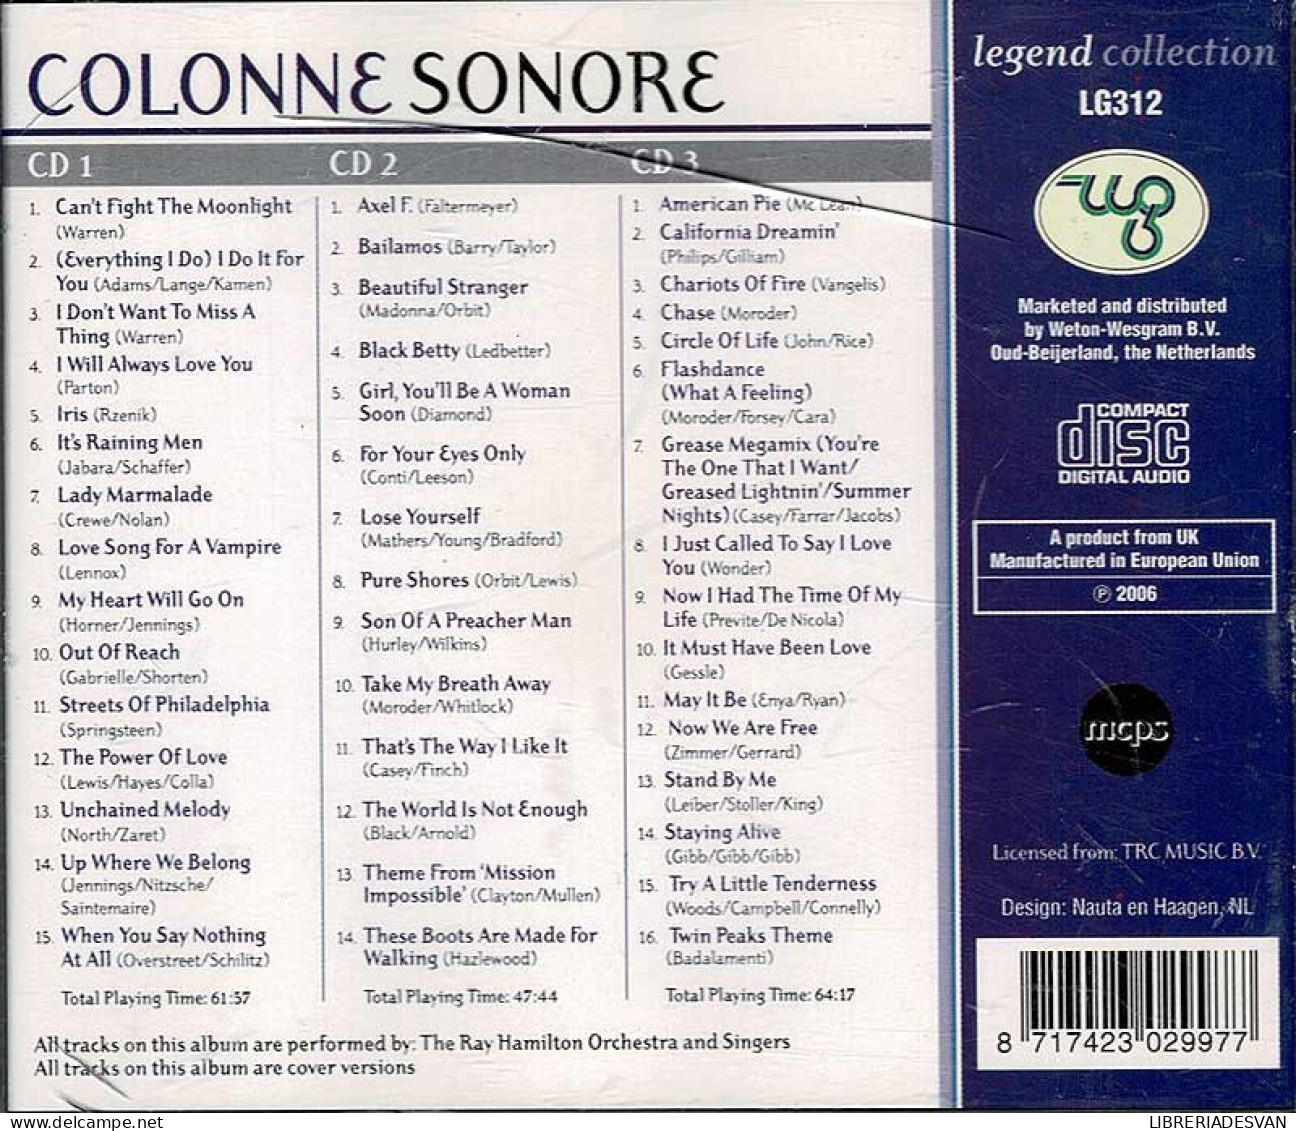 Ray Hamilton Orchestra & Singers - Colonne Sonore Legend Collection. 3 X CD - Soundtracks, Film Music